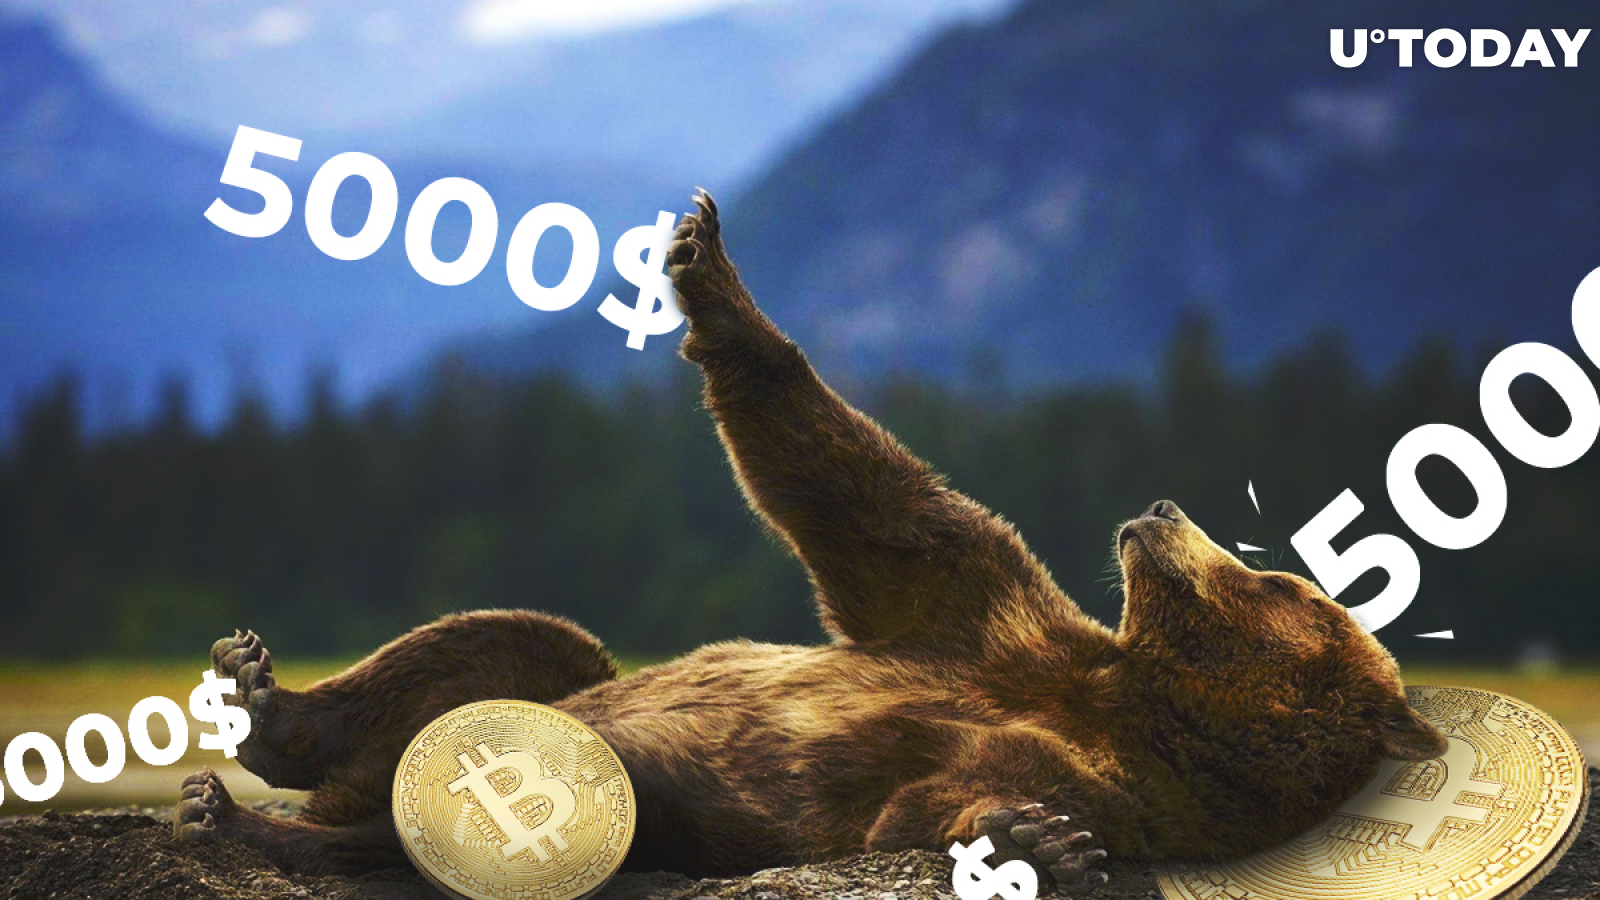 Bitcoin (BTC) Price Analysis: Bears Awakening? Bitcoin Rollback Could Be Over $5,000